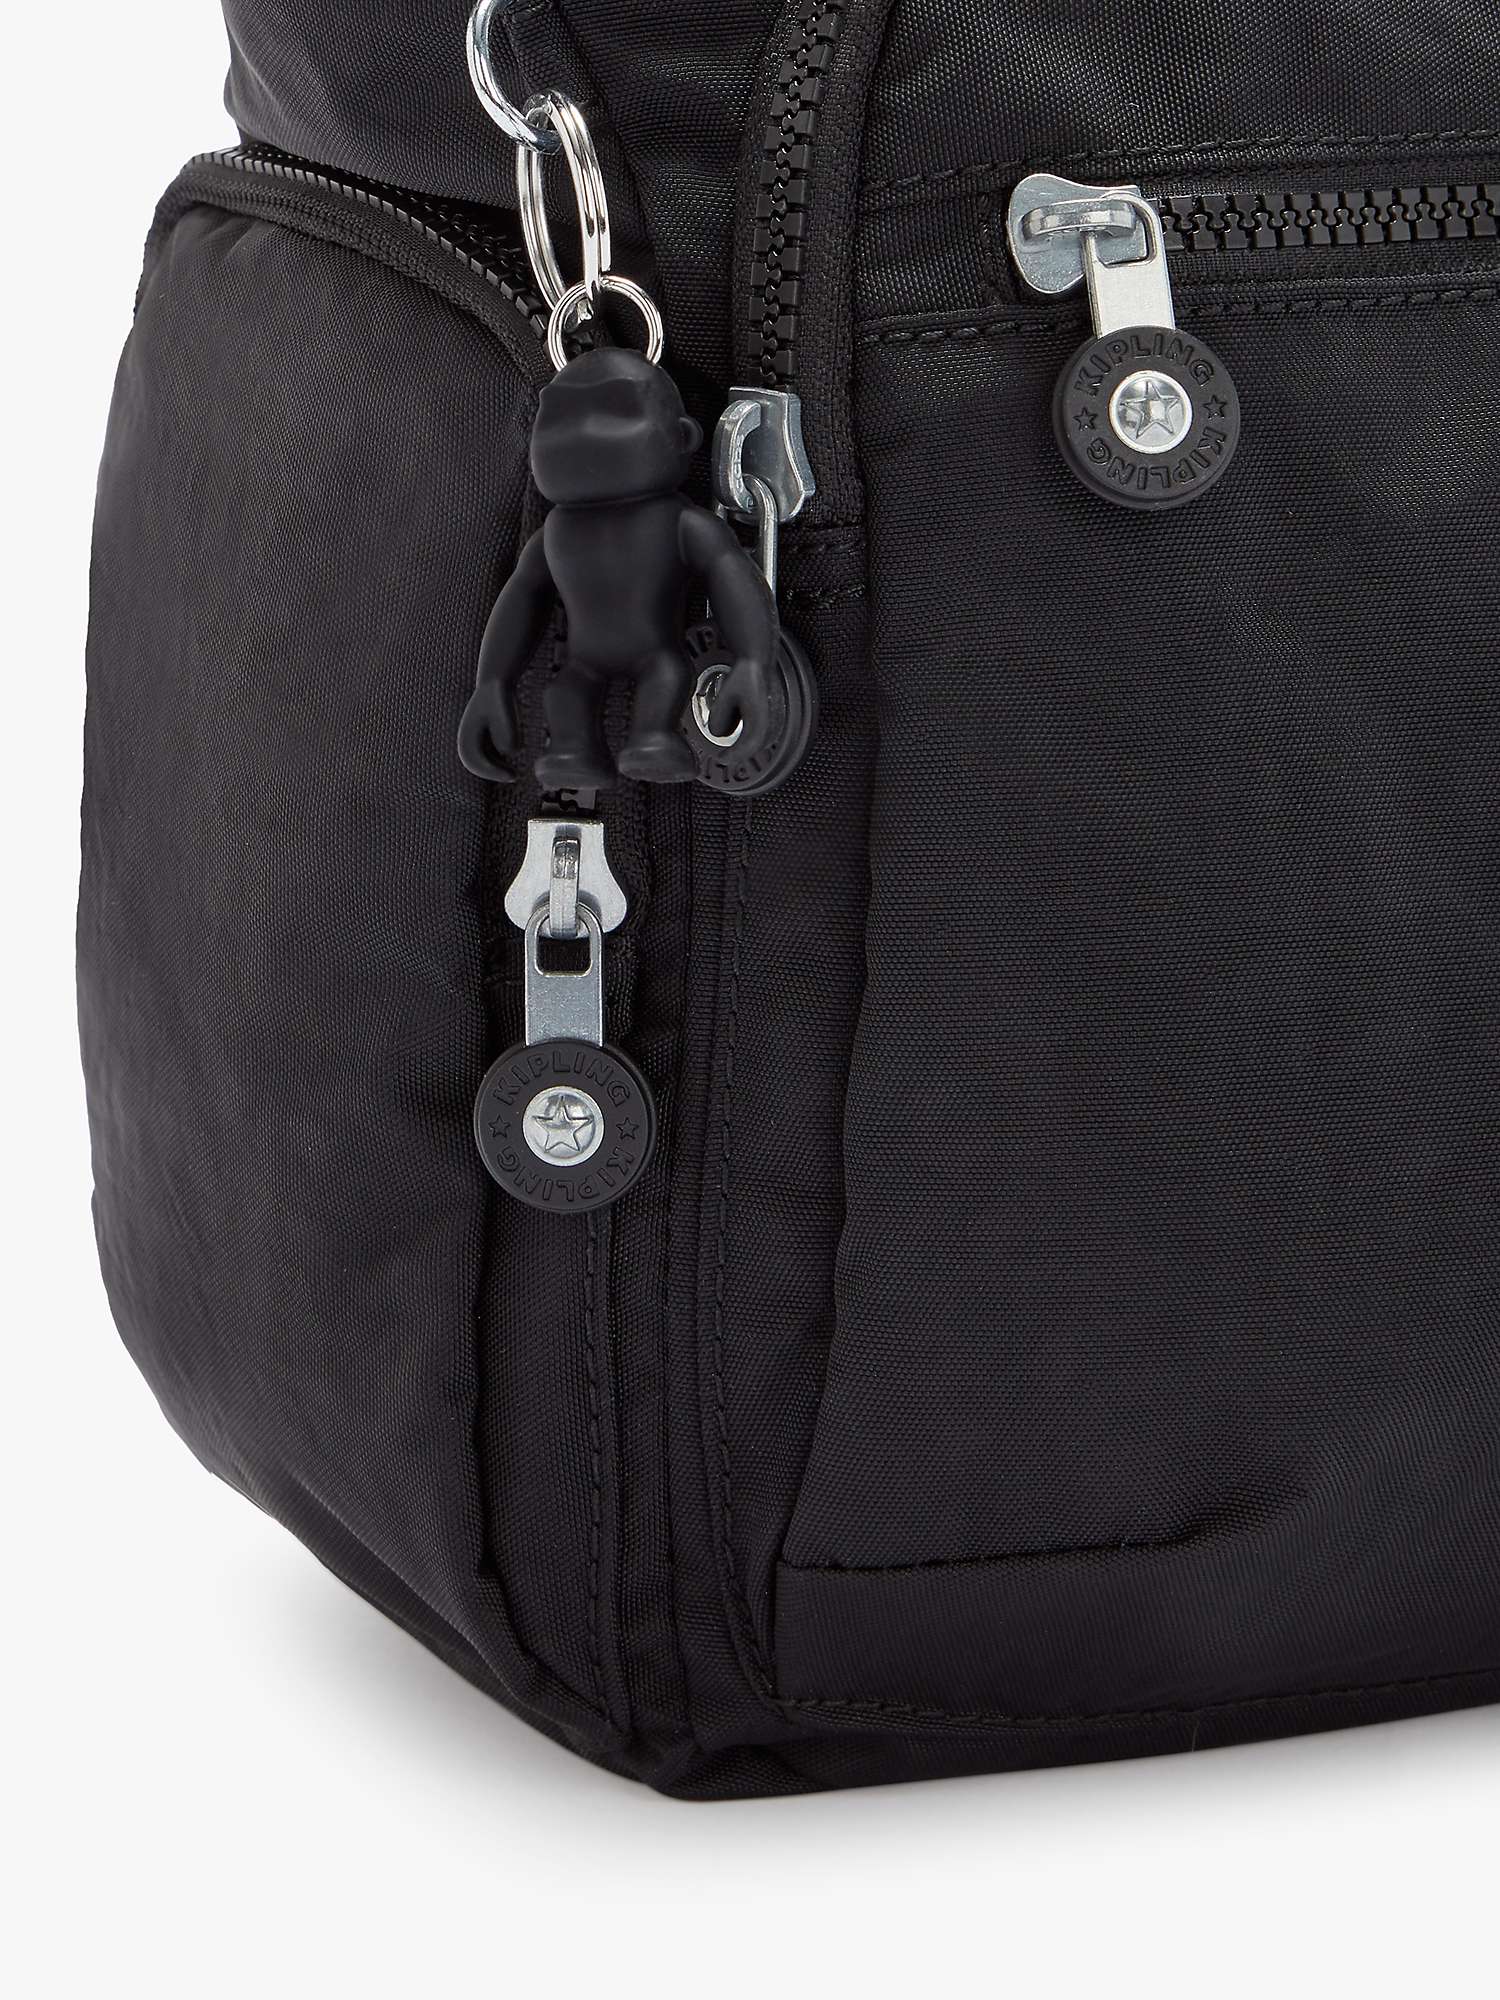 Buy Kipling Gabbie Medium Cross Body Bag Online at johnlewis.com